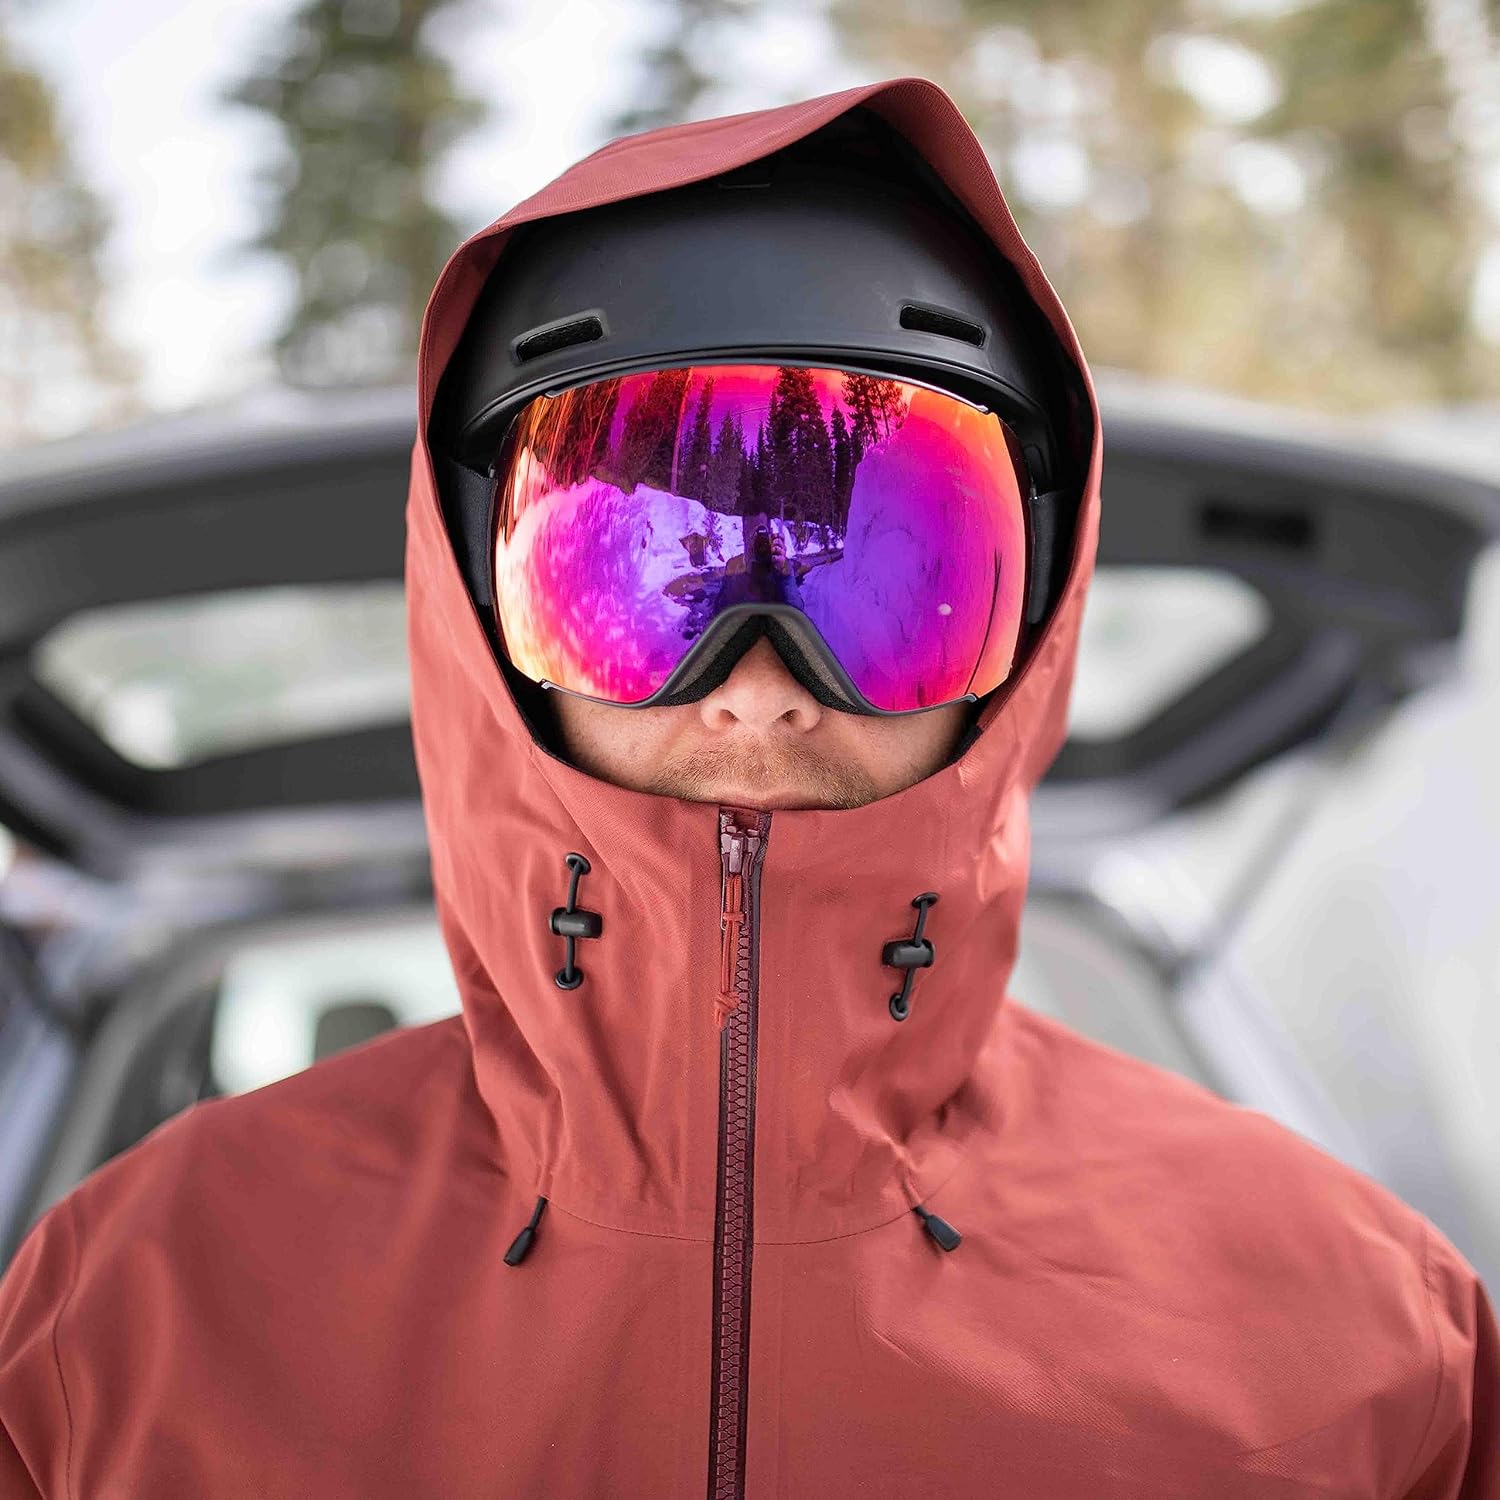 Flylow Mens Lab Coat Waterproof Breathable Ski  Snowboard Jacket